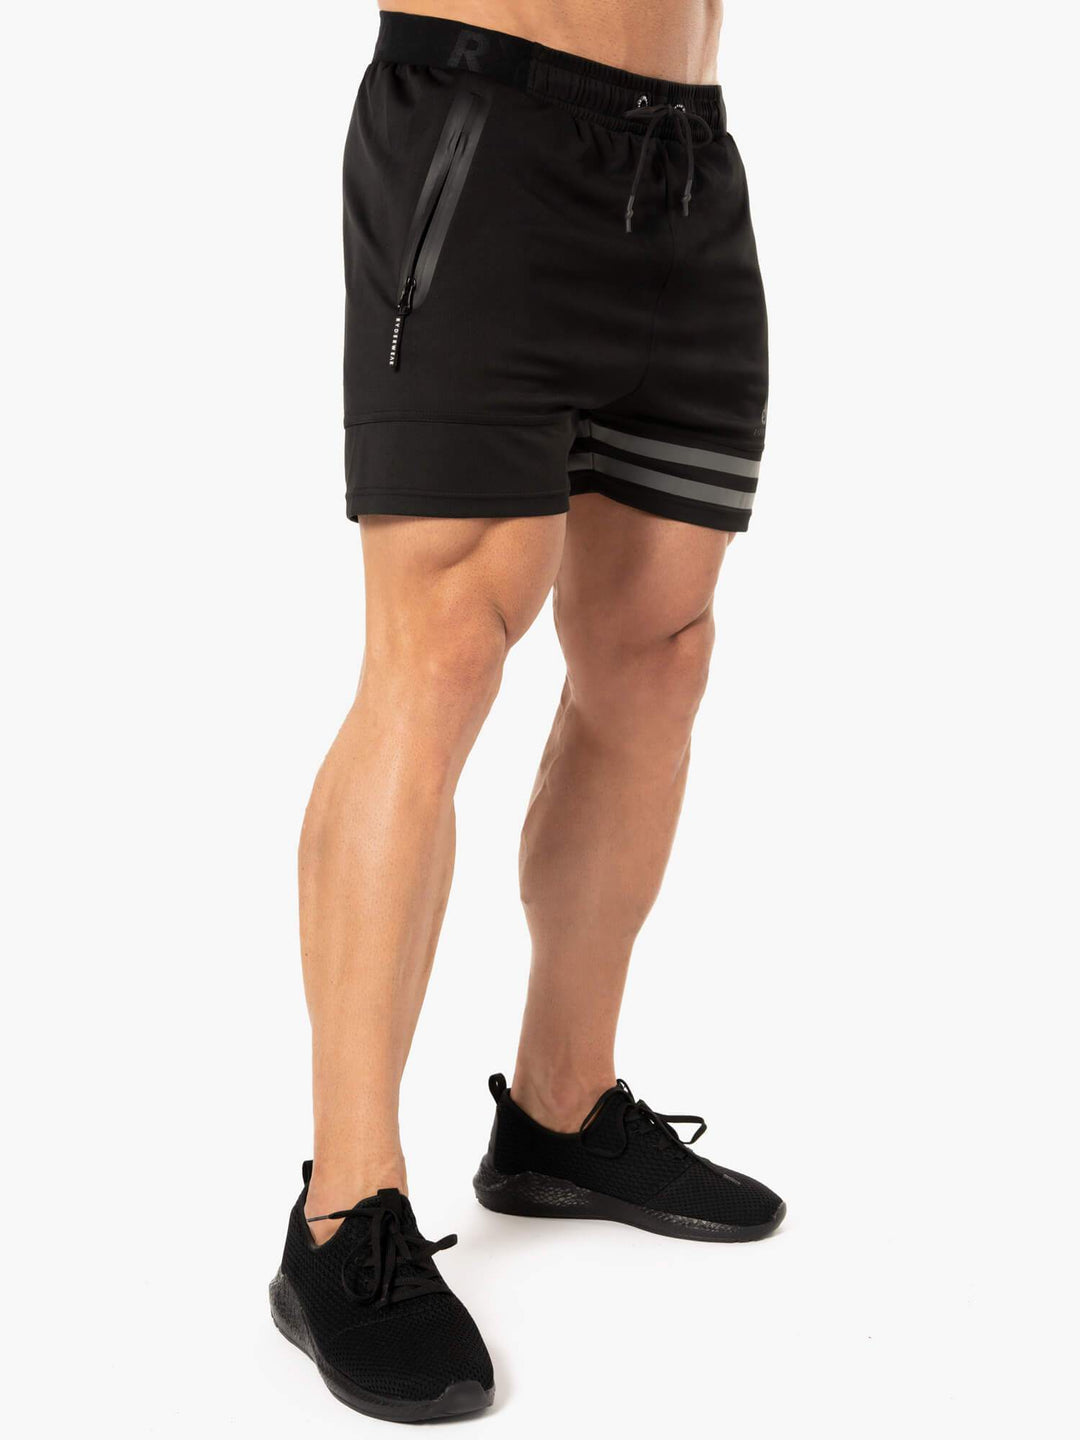 Evo Training Shorts - Black - Ryderwear